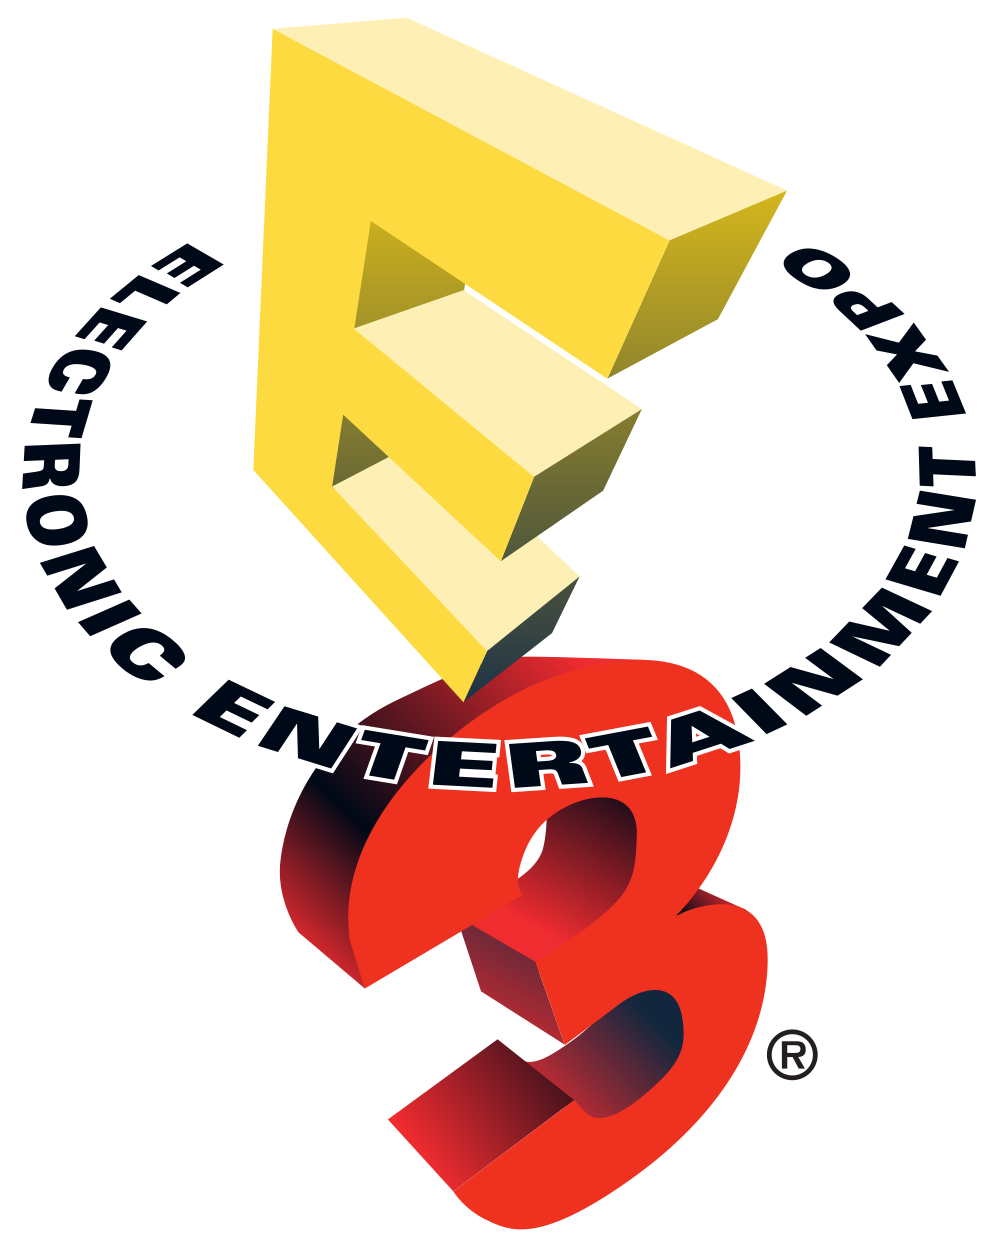 E3 2016 : Conférence Microsoft, de Gears of War 4 aux Xbox One S et Scorpio !